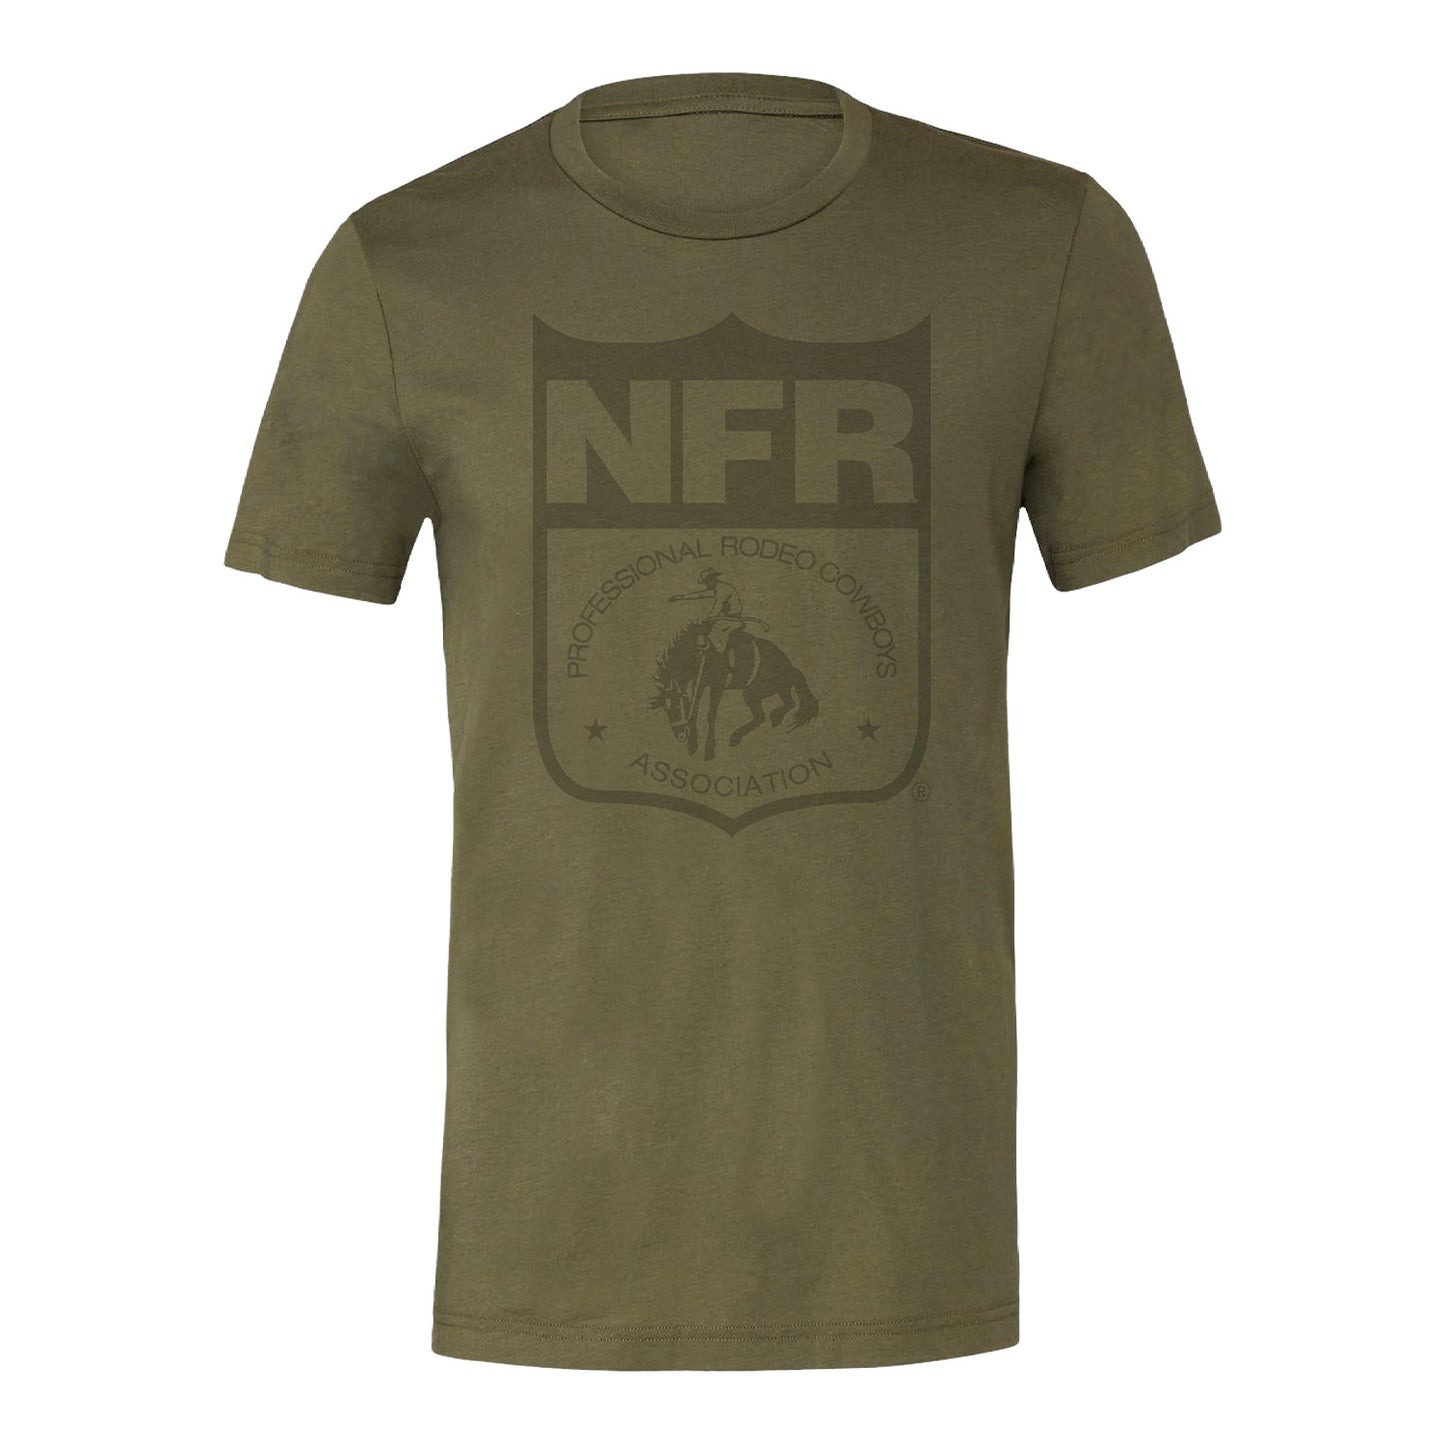 NFR Tonal Shield T-Shirt in Green - Front View